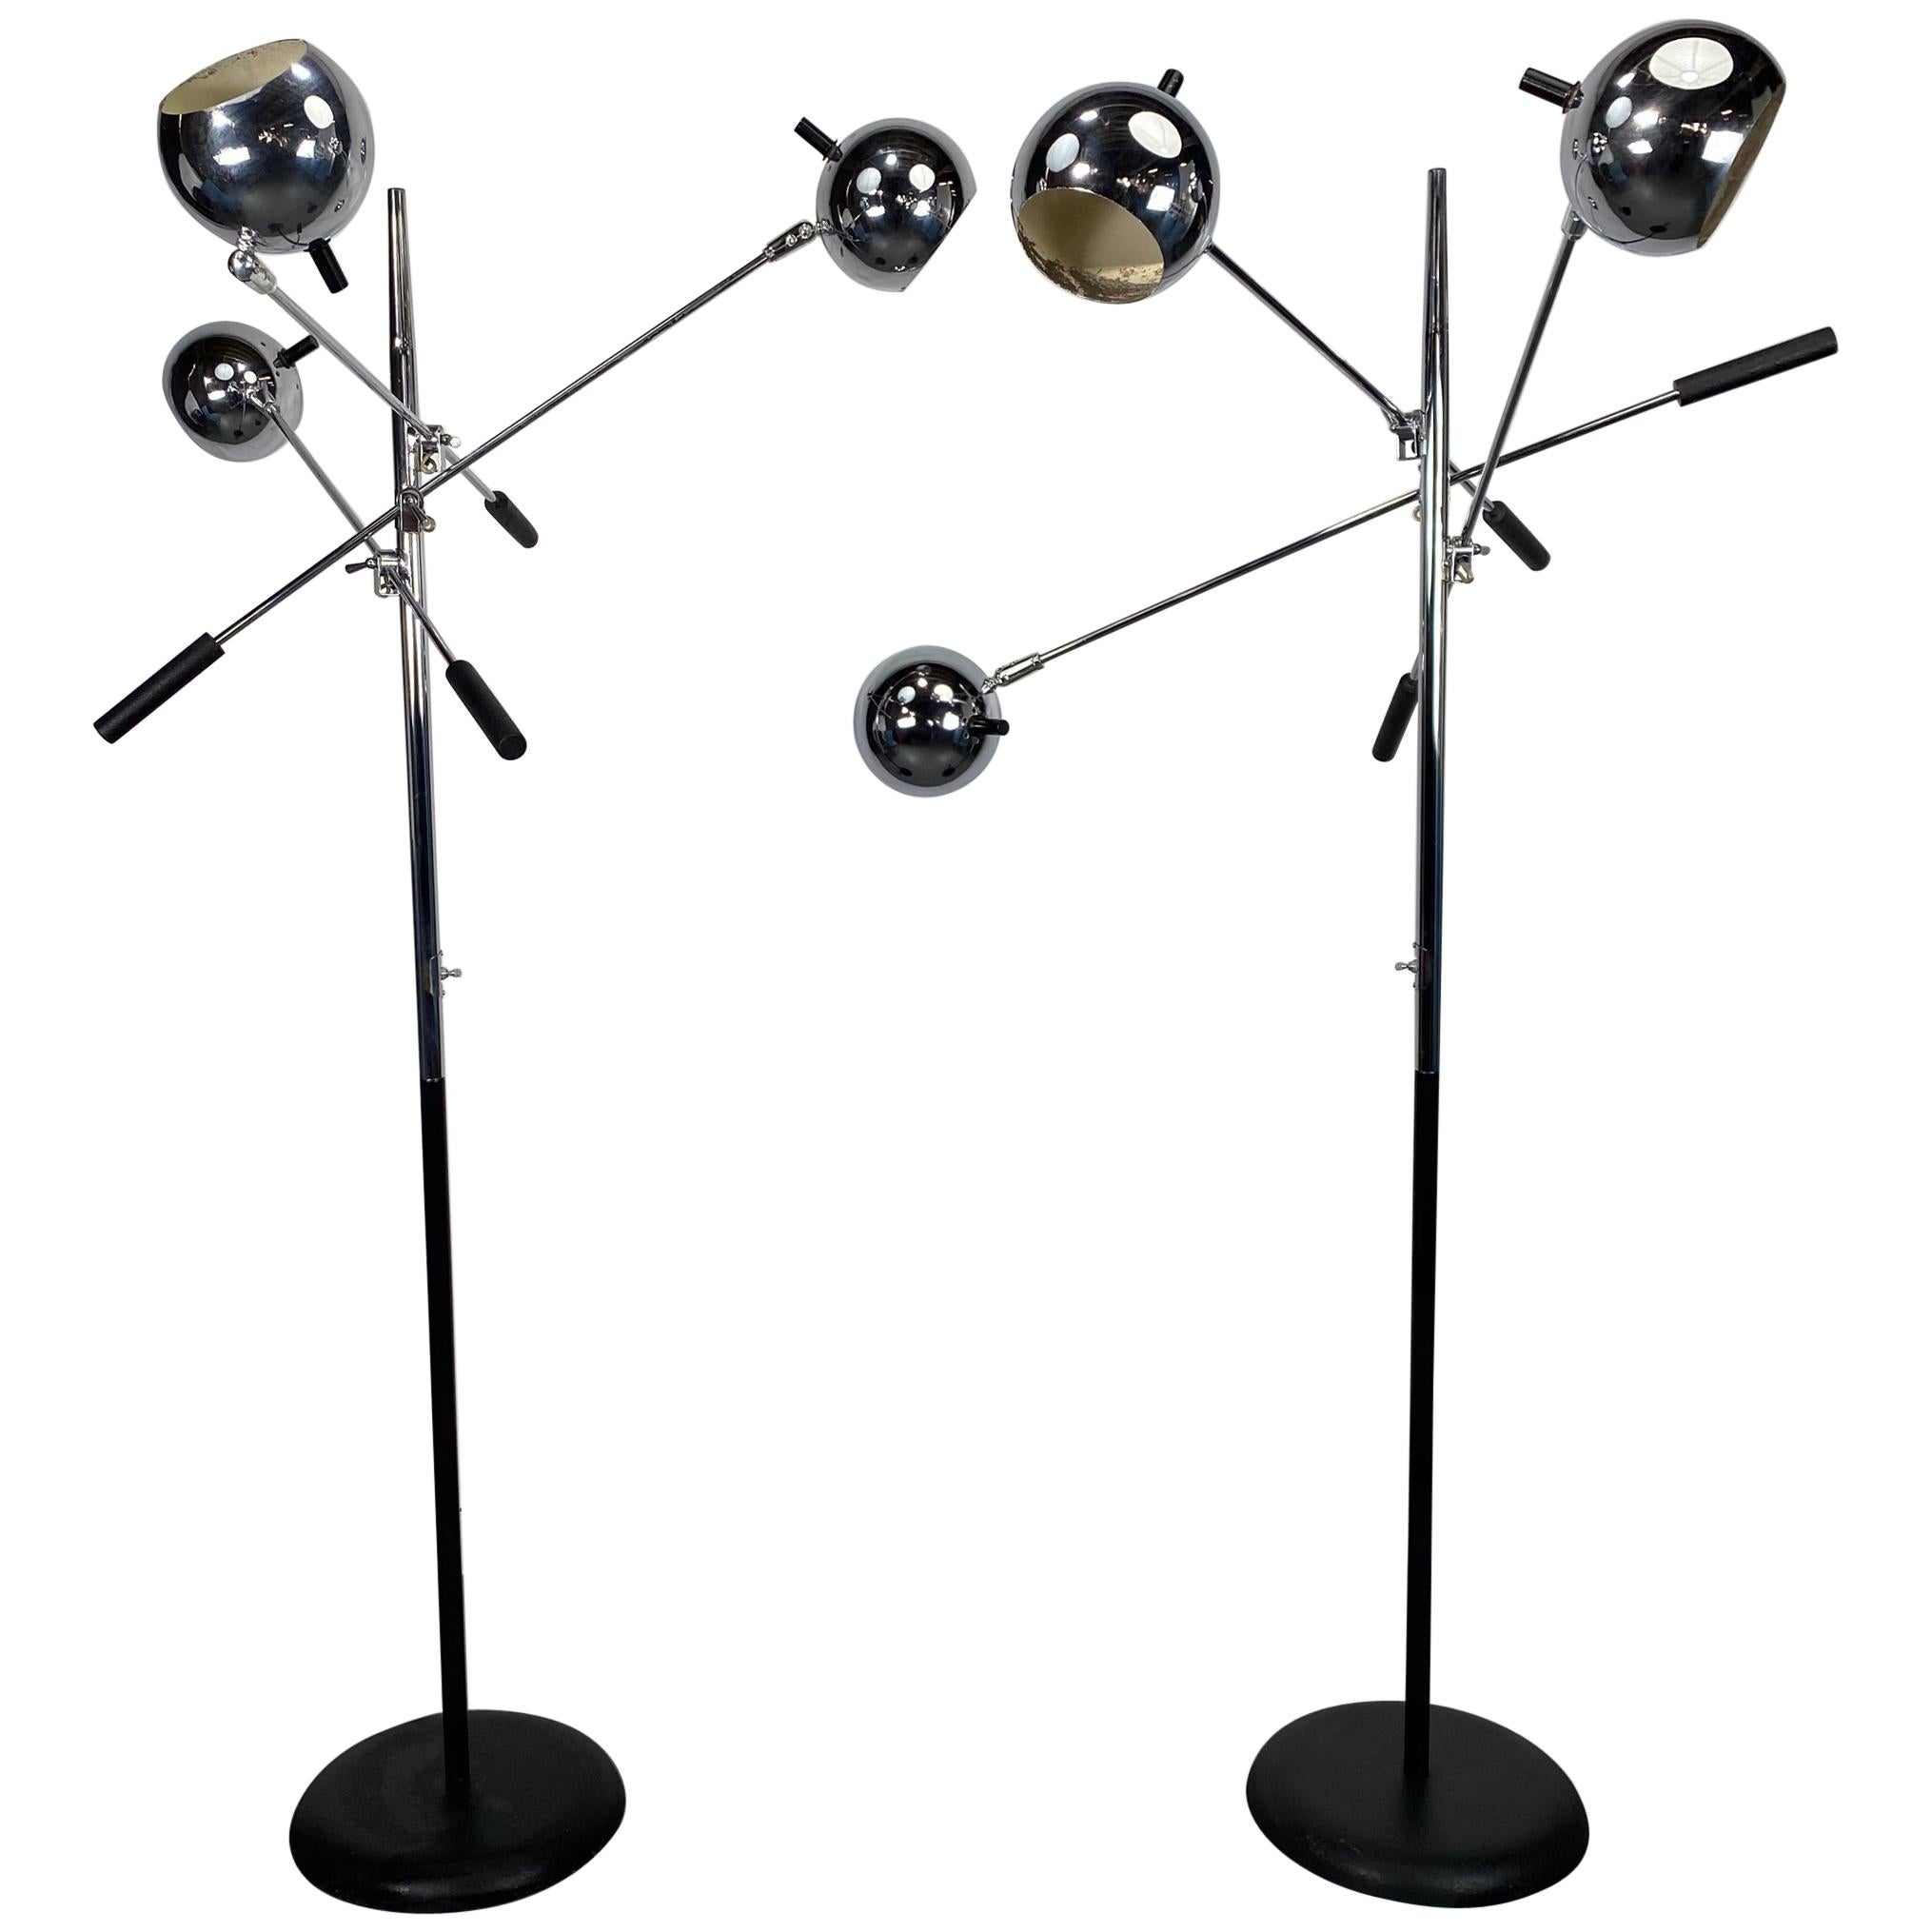 Matched Pair of Robert Sonneman Triennale Eyegball Orbiter Floor Lamps